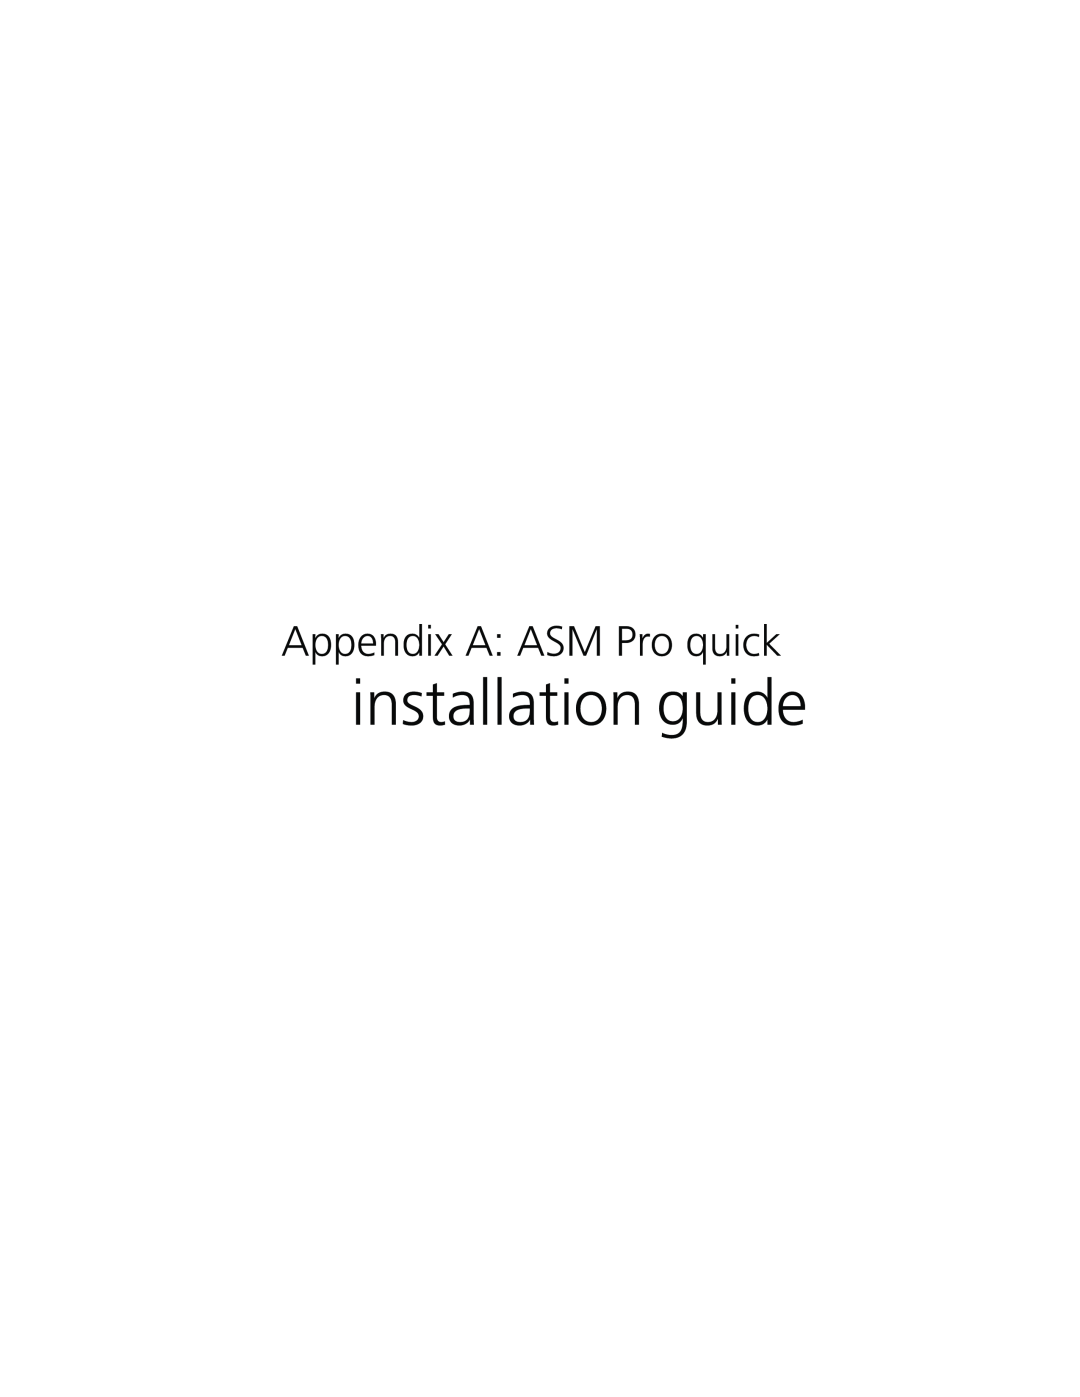 Acer Altos G610 manual installation guide, Appendix A ASM Pro quick 